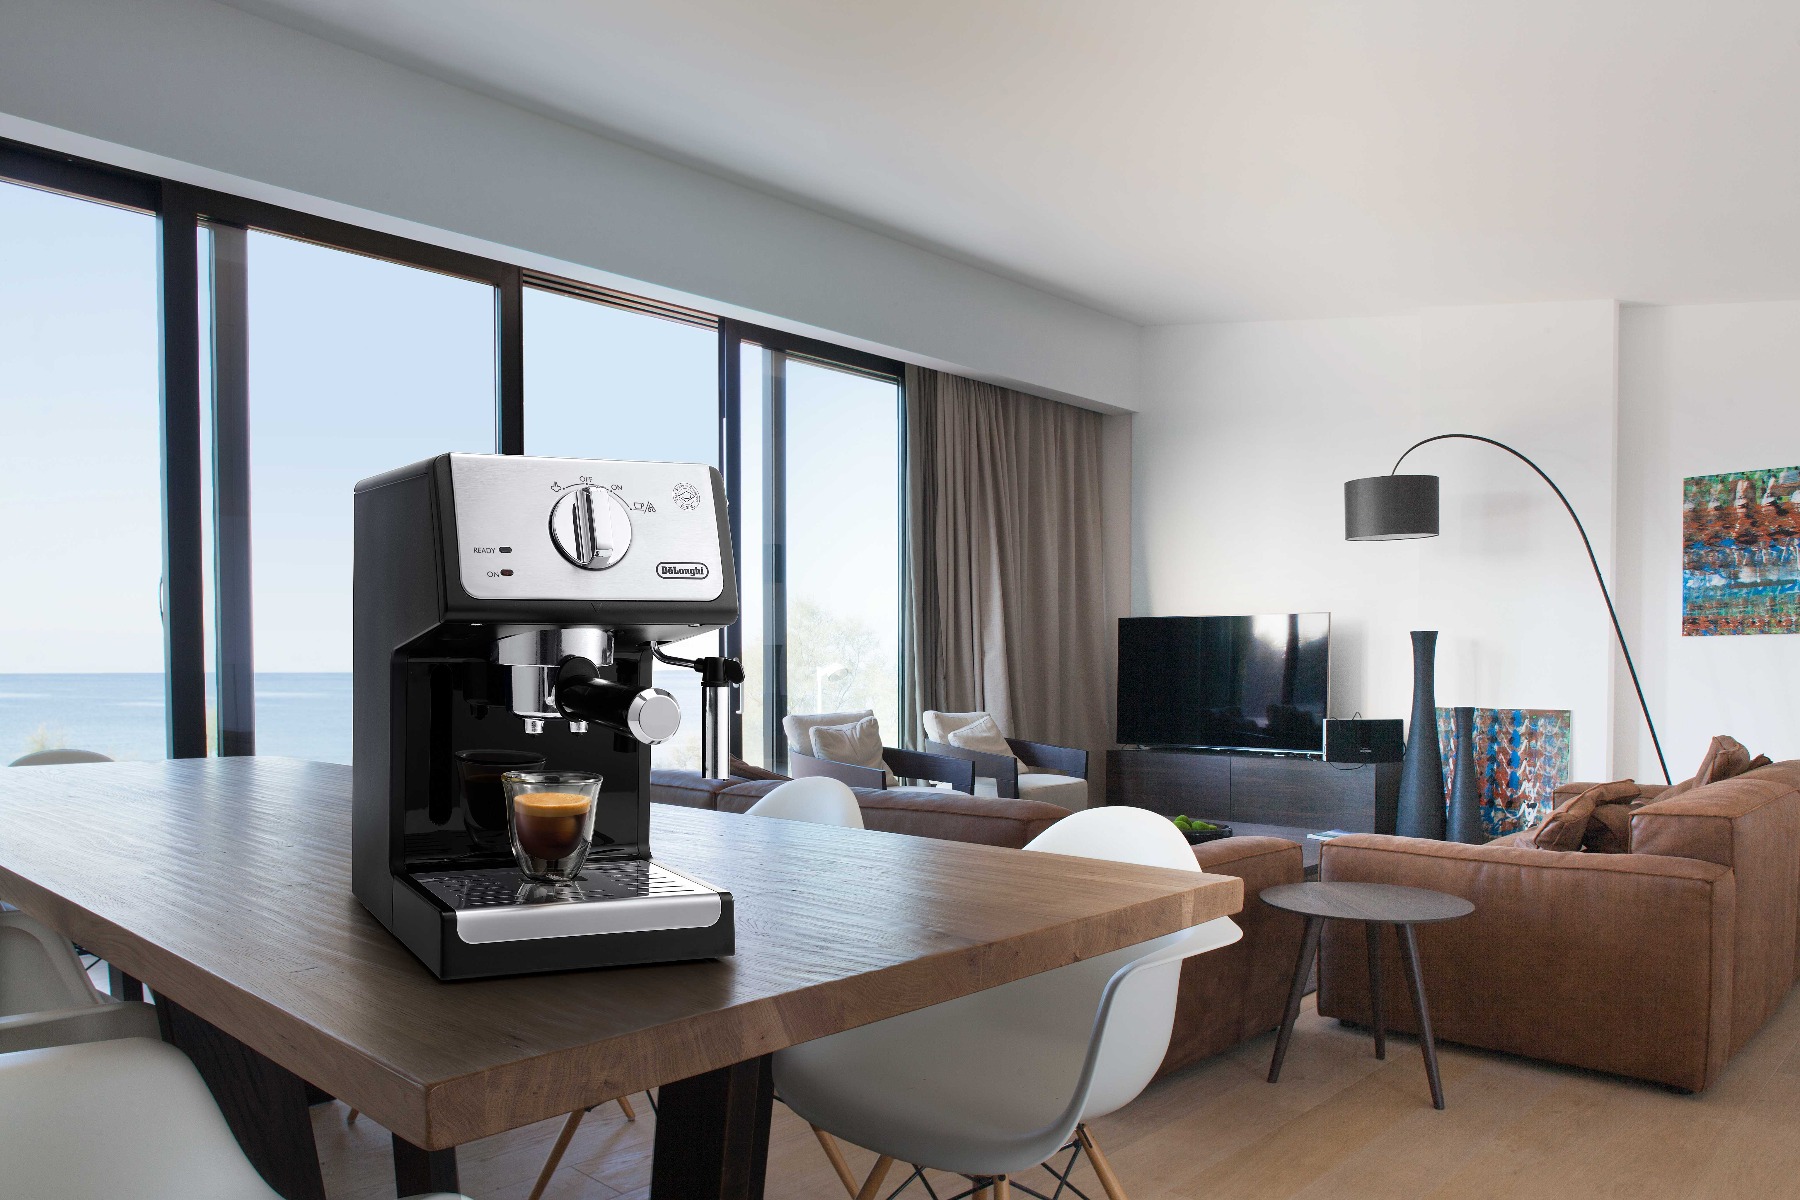 pump espresso coffee machines in living room